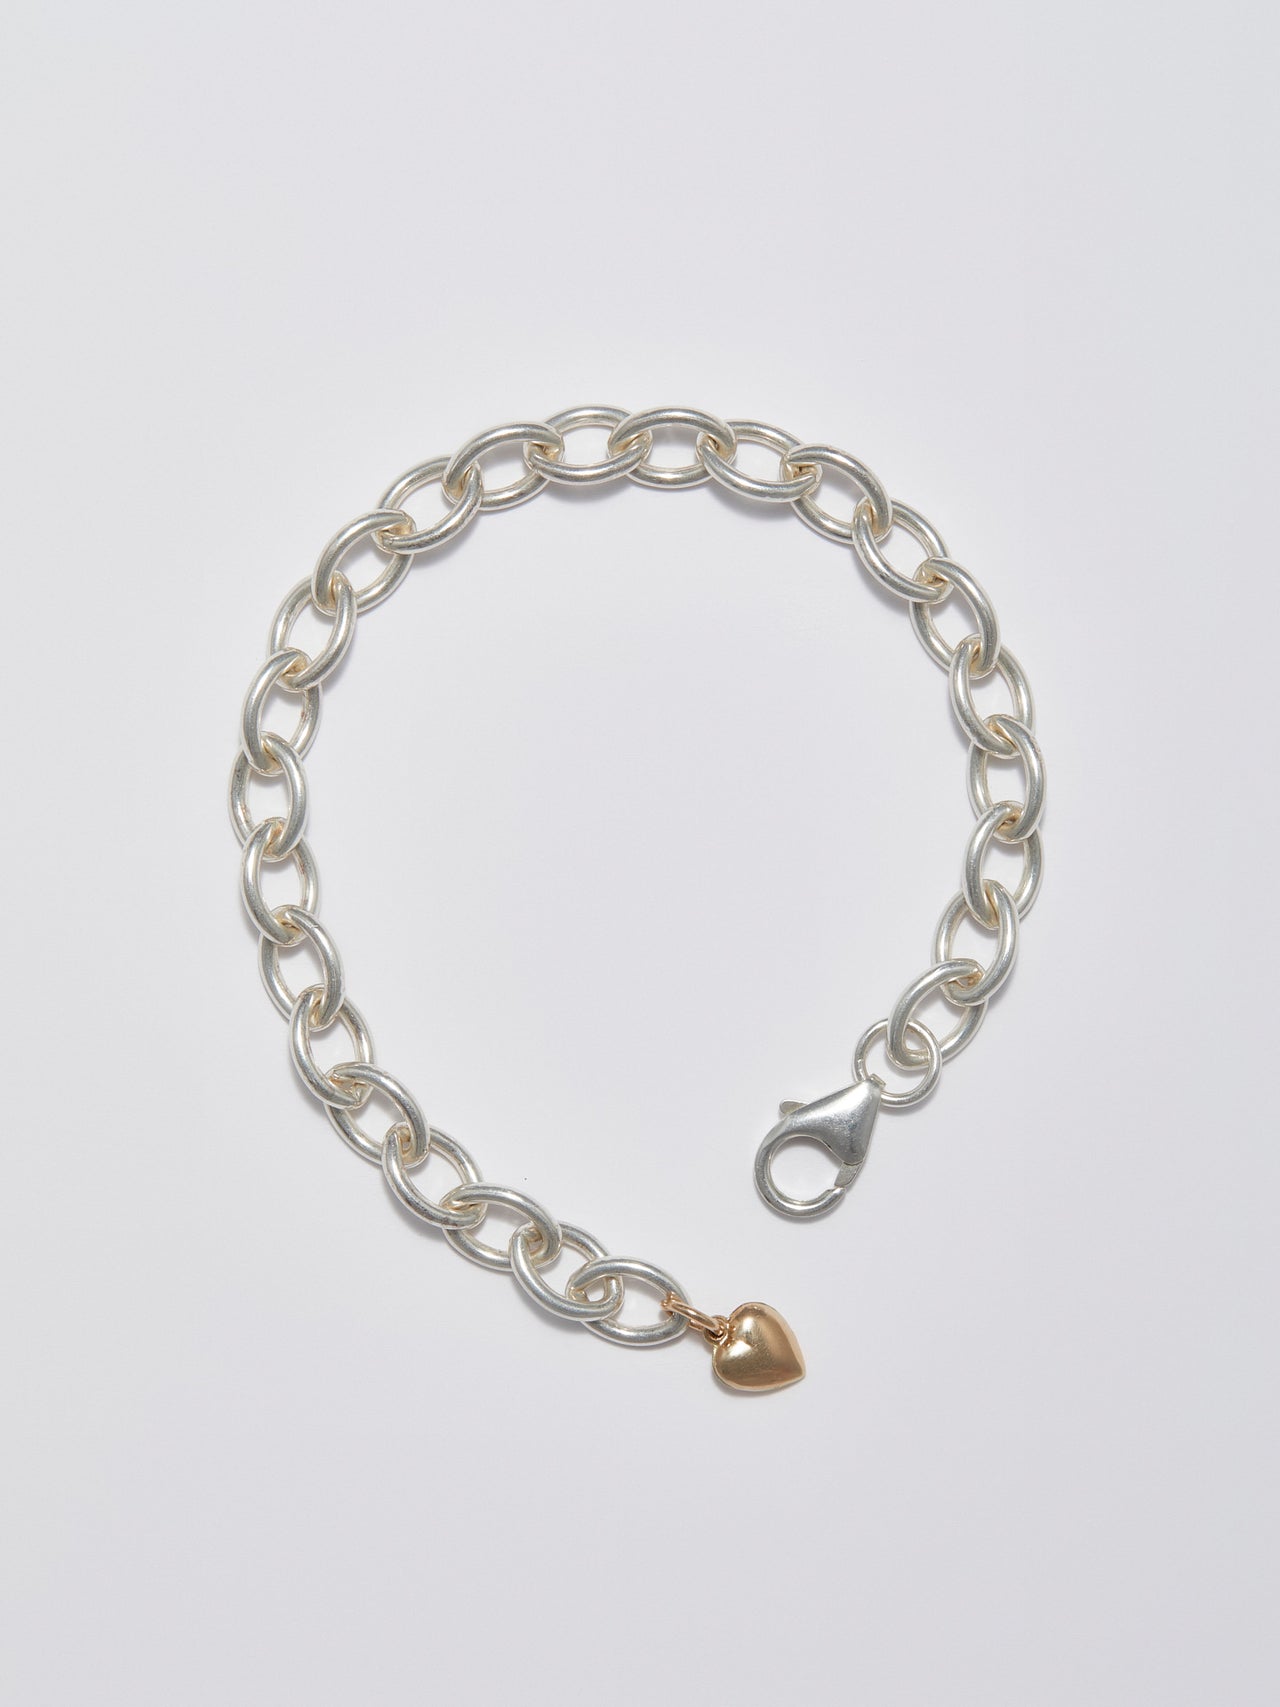 Puff Heart Bracelet: Sterling Silver Chain Bracelet 8x11mm Links 8'' Total Length